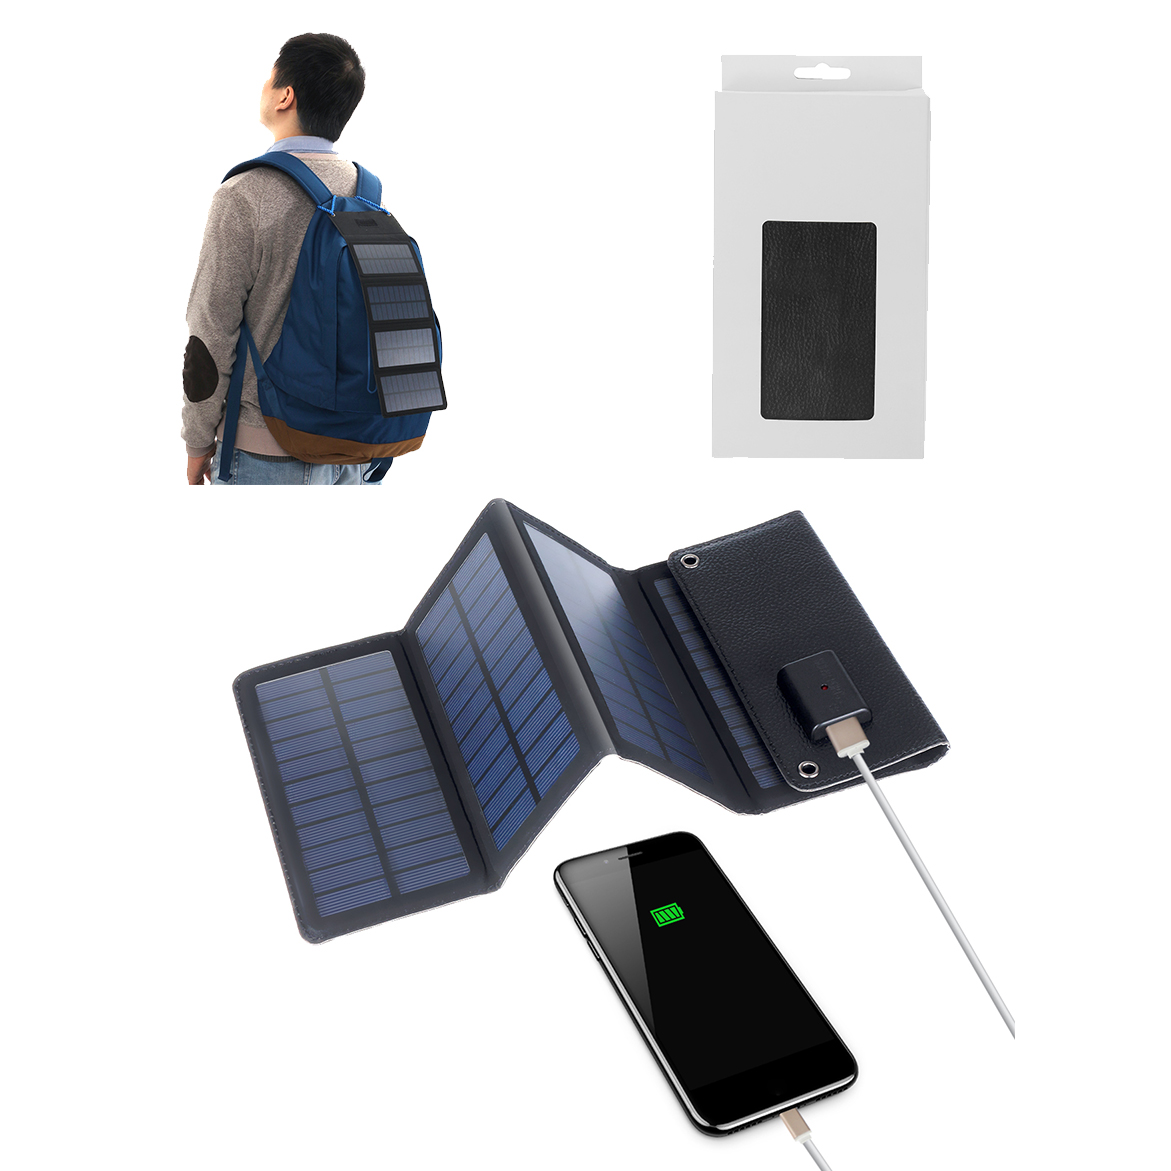 

7W 5V Waterproof Foldable Mono-crystalline Silicon Solar Panel With LED Charging indicator & USB Interface